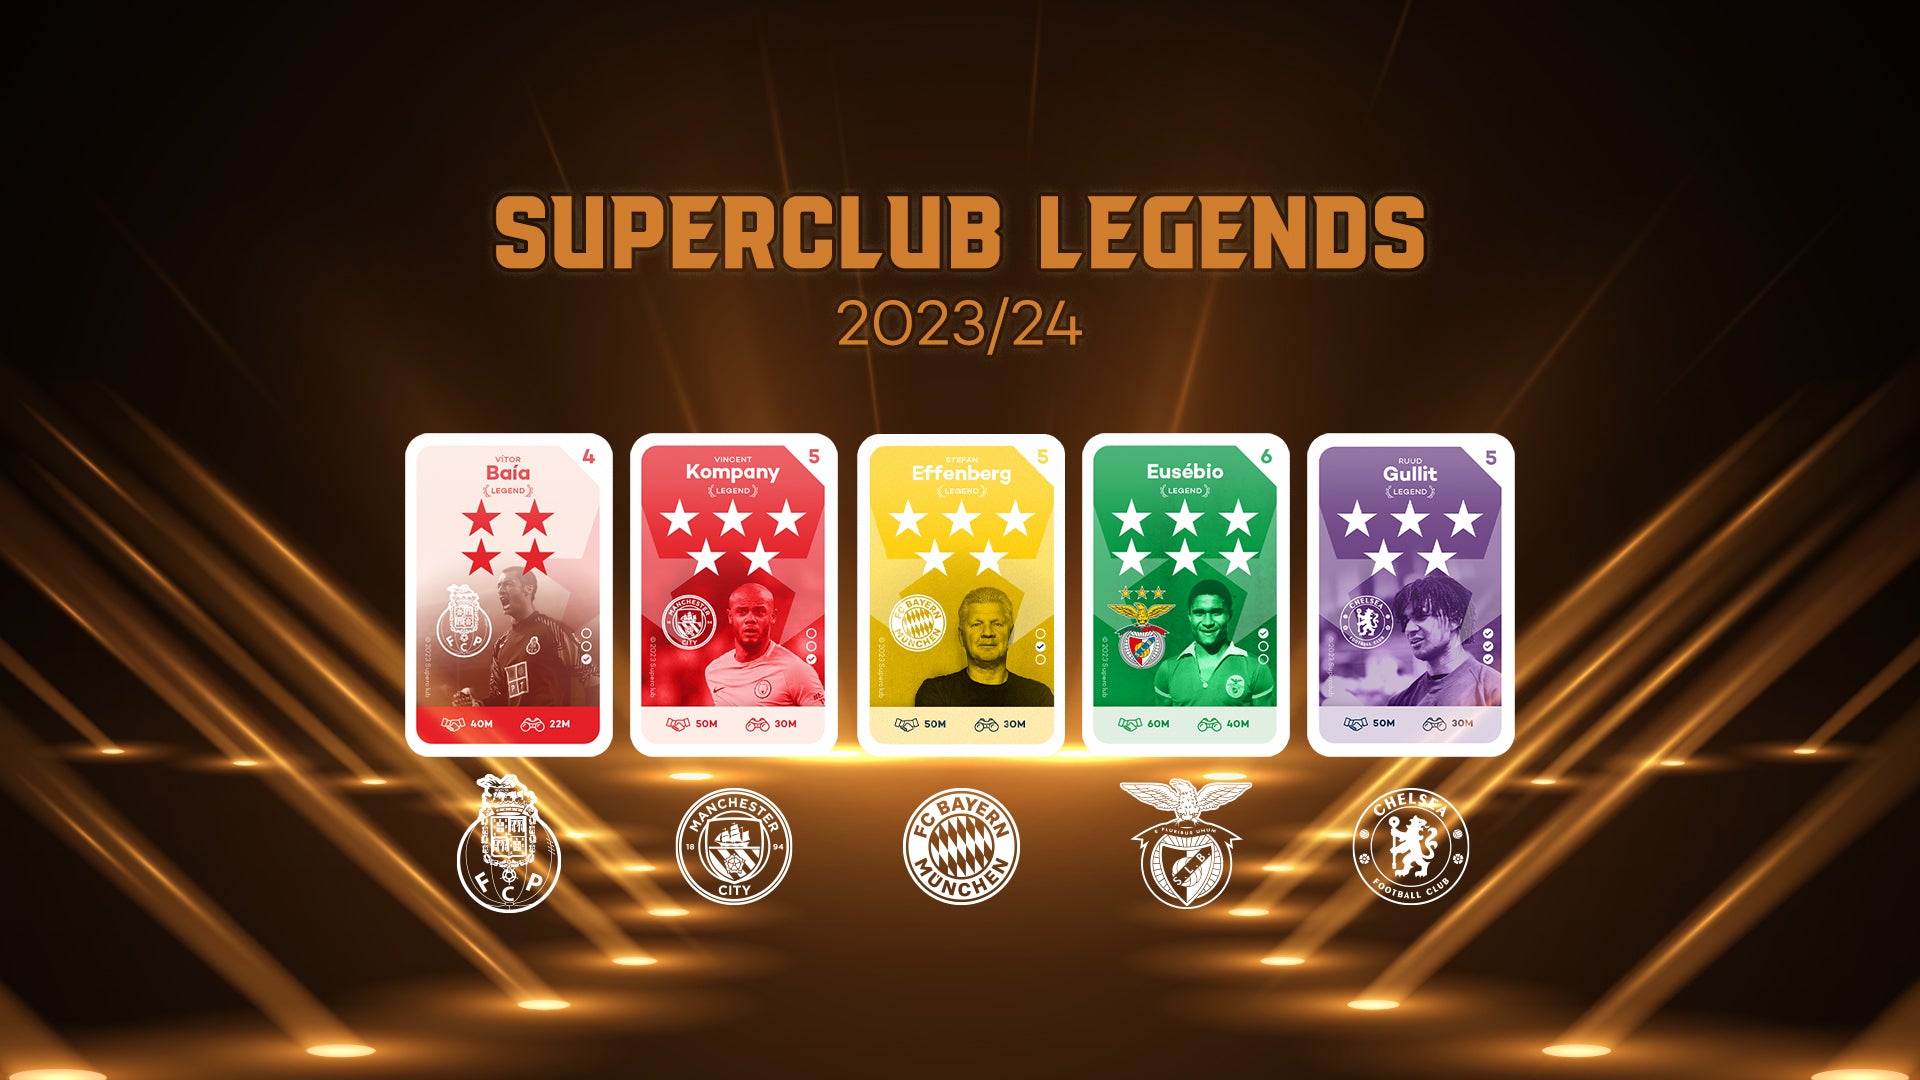 Meet the Legends in Superclub